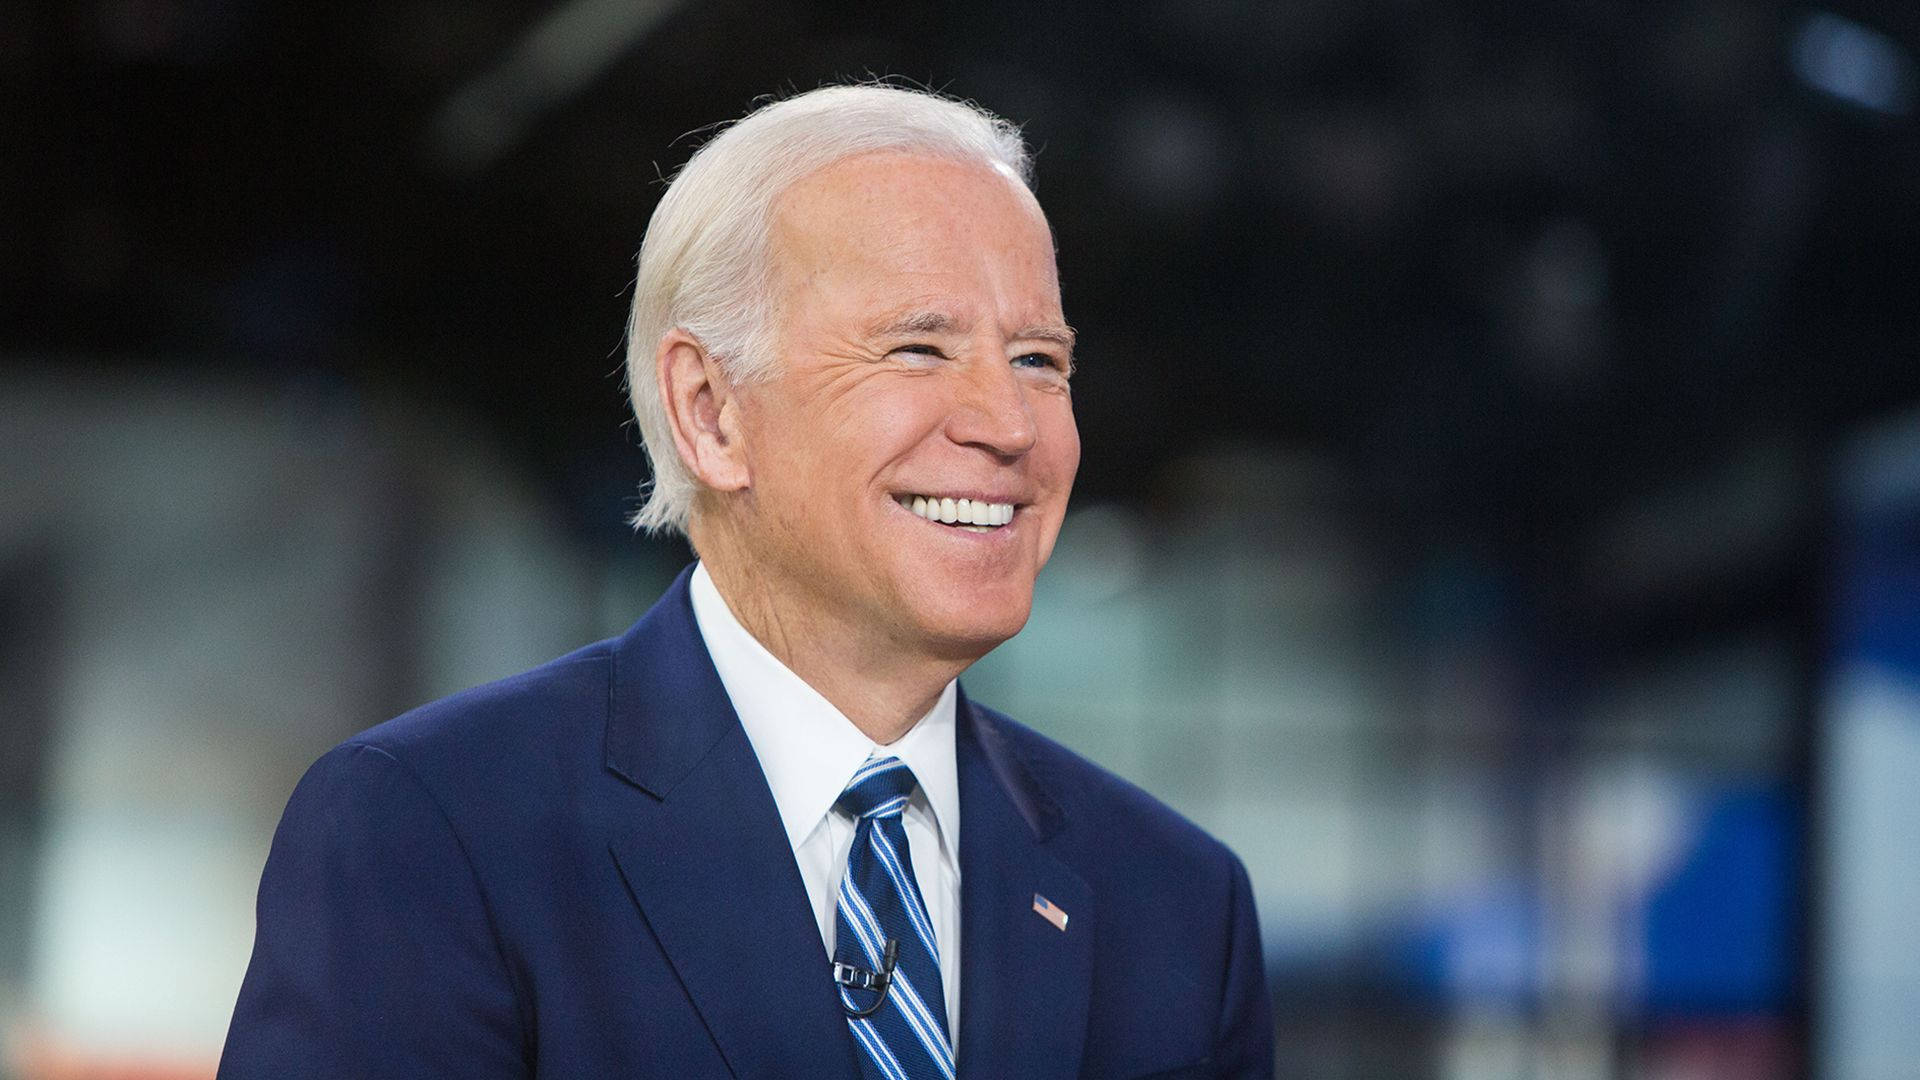 Joe Biden with his signature smile! Wallpaper